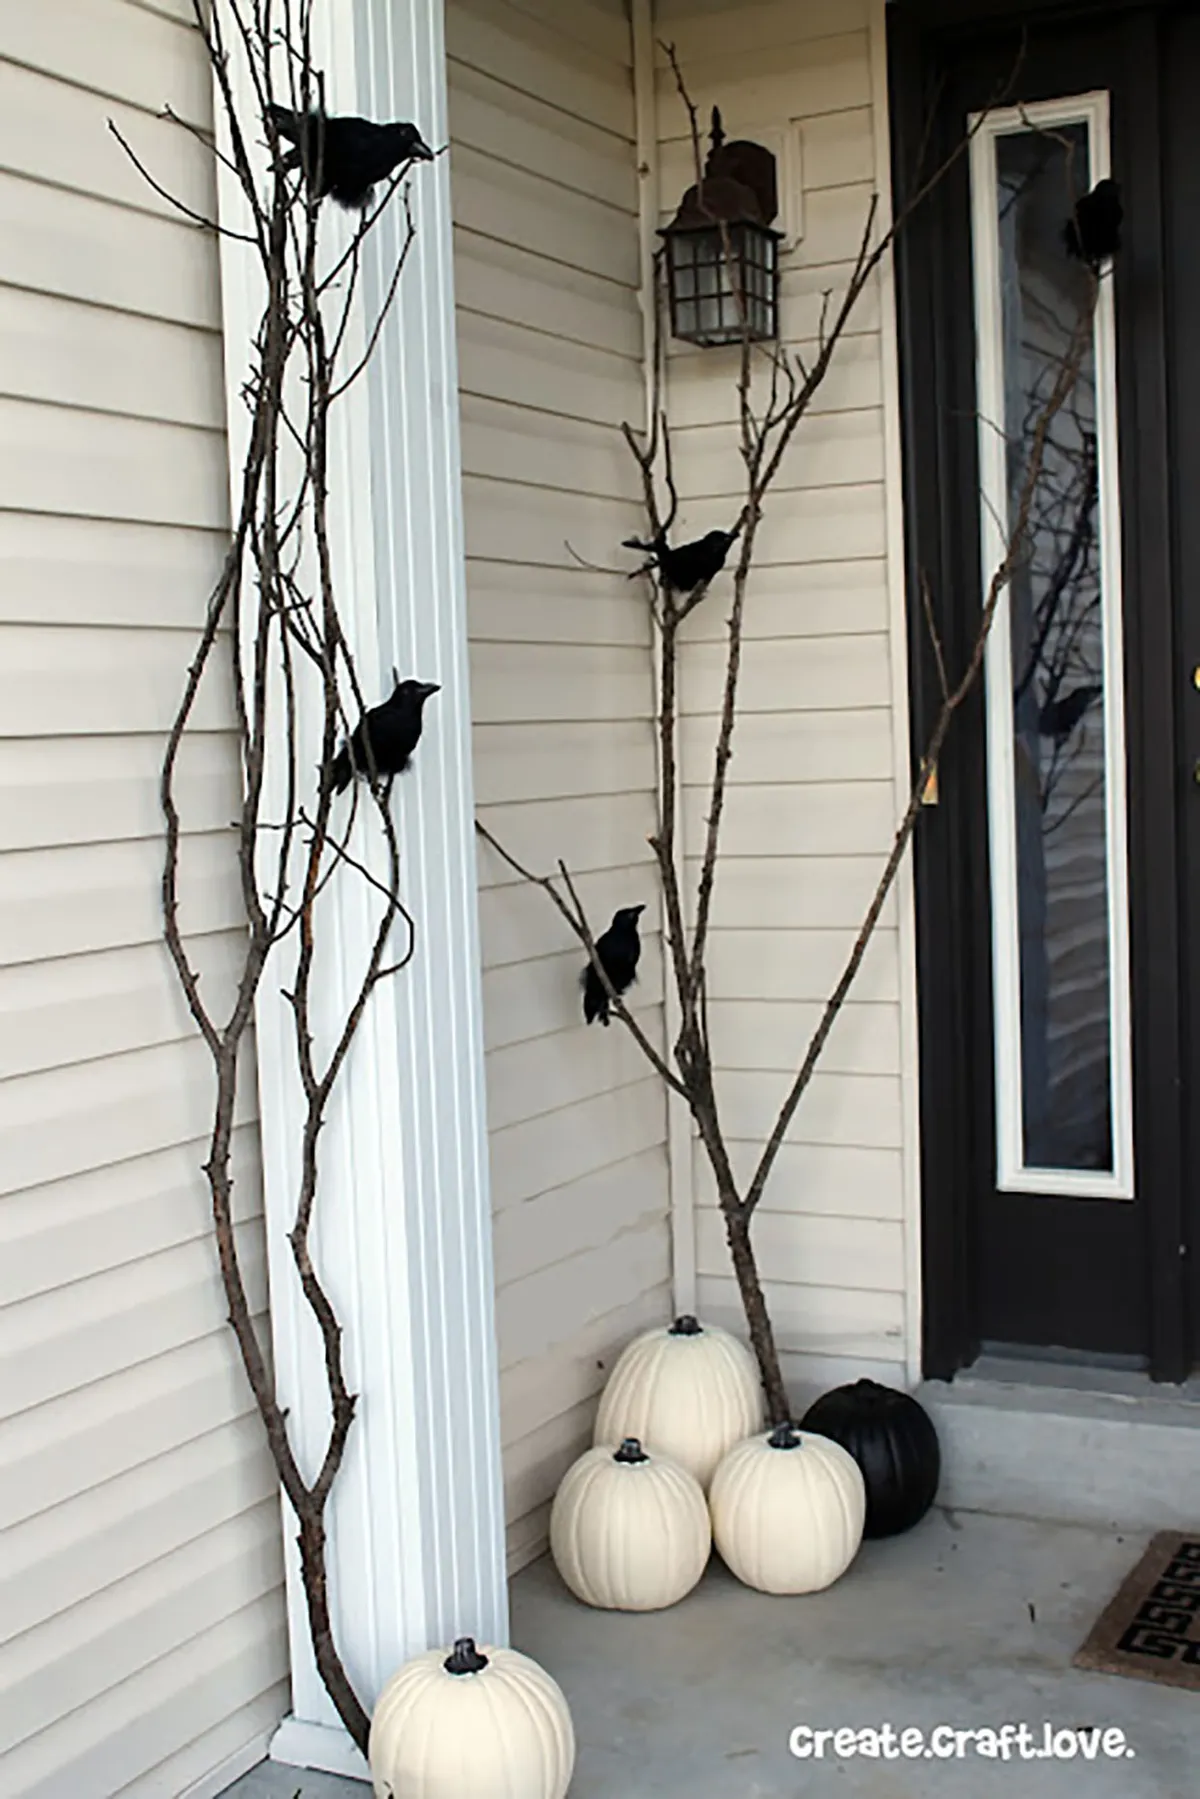 Raven-inspired Halloween porch